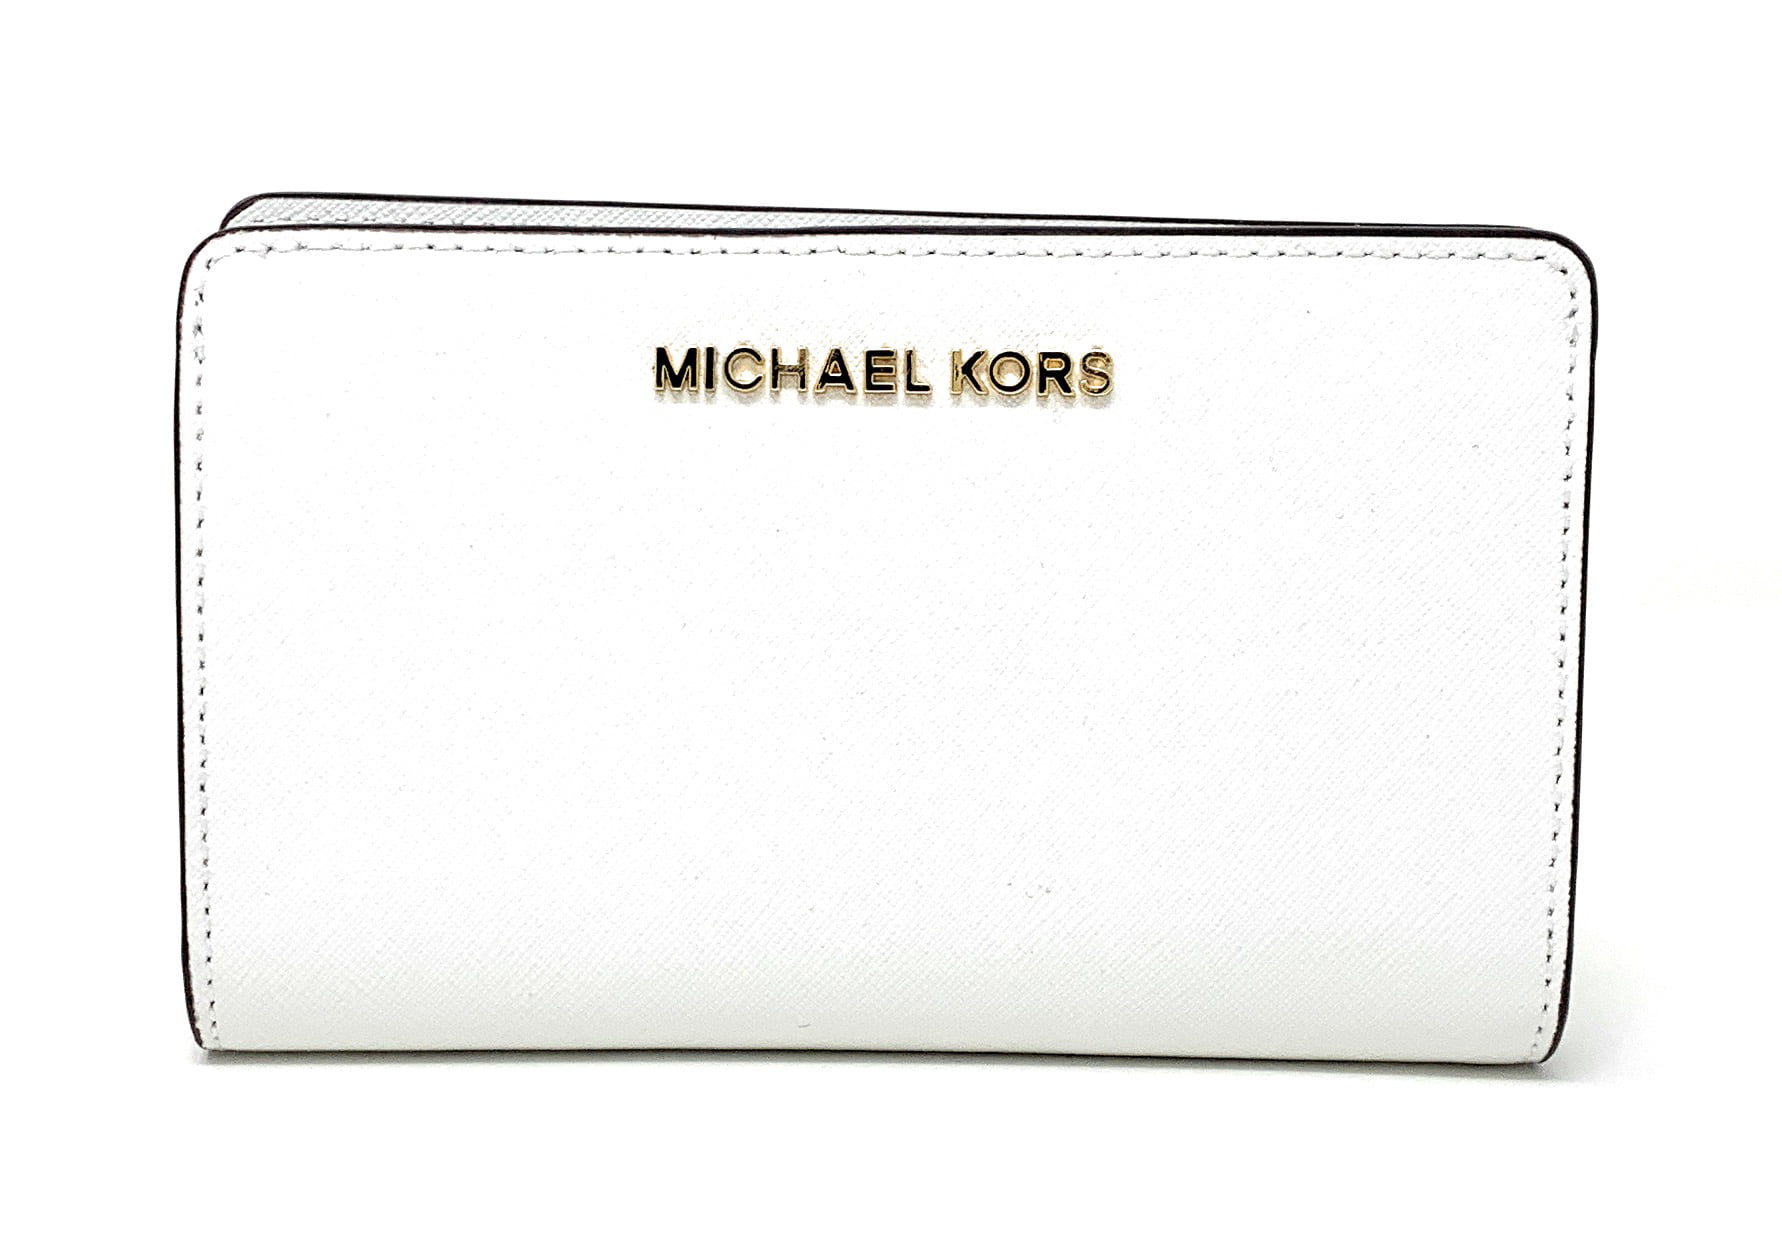 michael kors optic white wallet